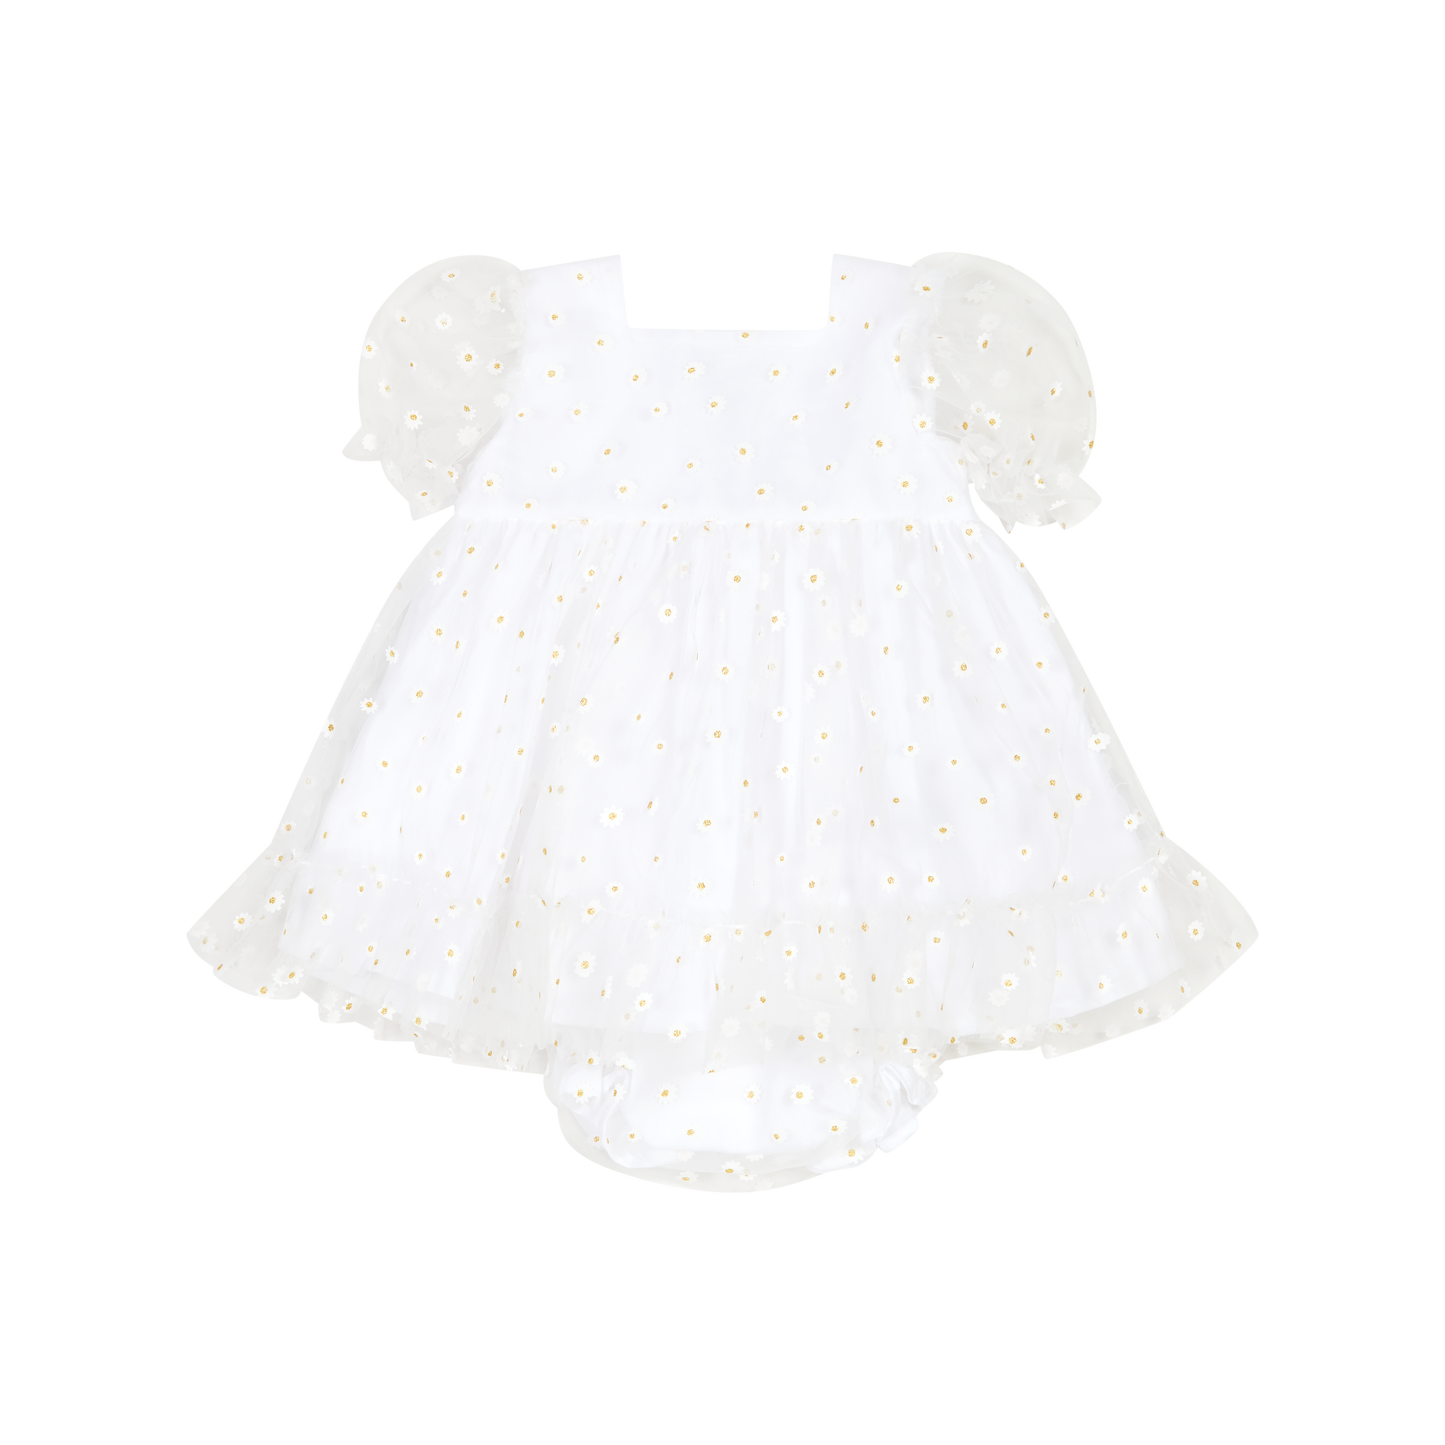 CHIC BY DEOLINDA Margarita Girls White Tulle Dress & Knickers - 24310